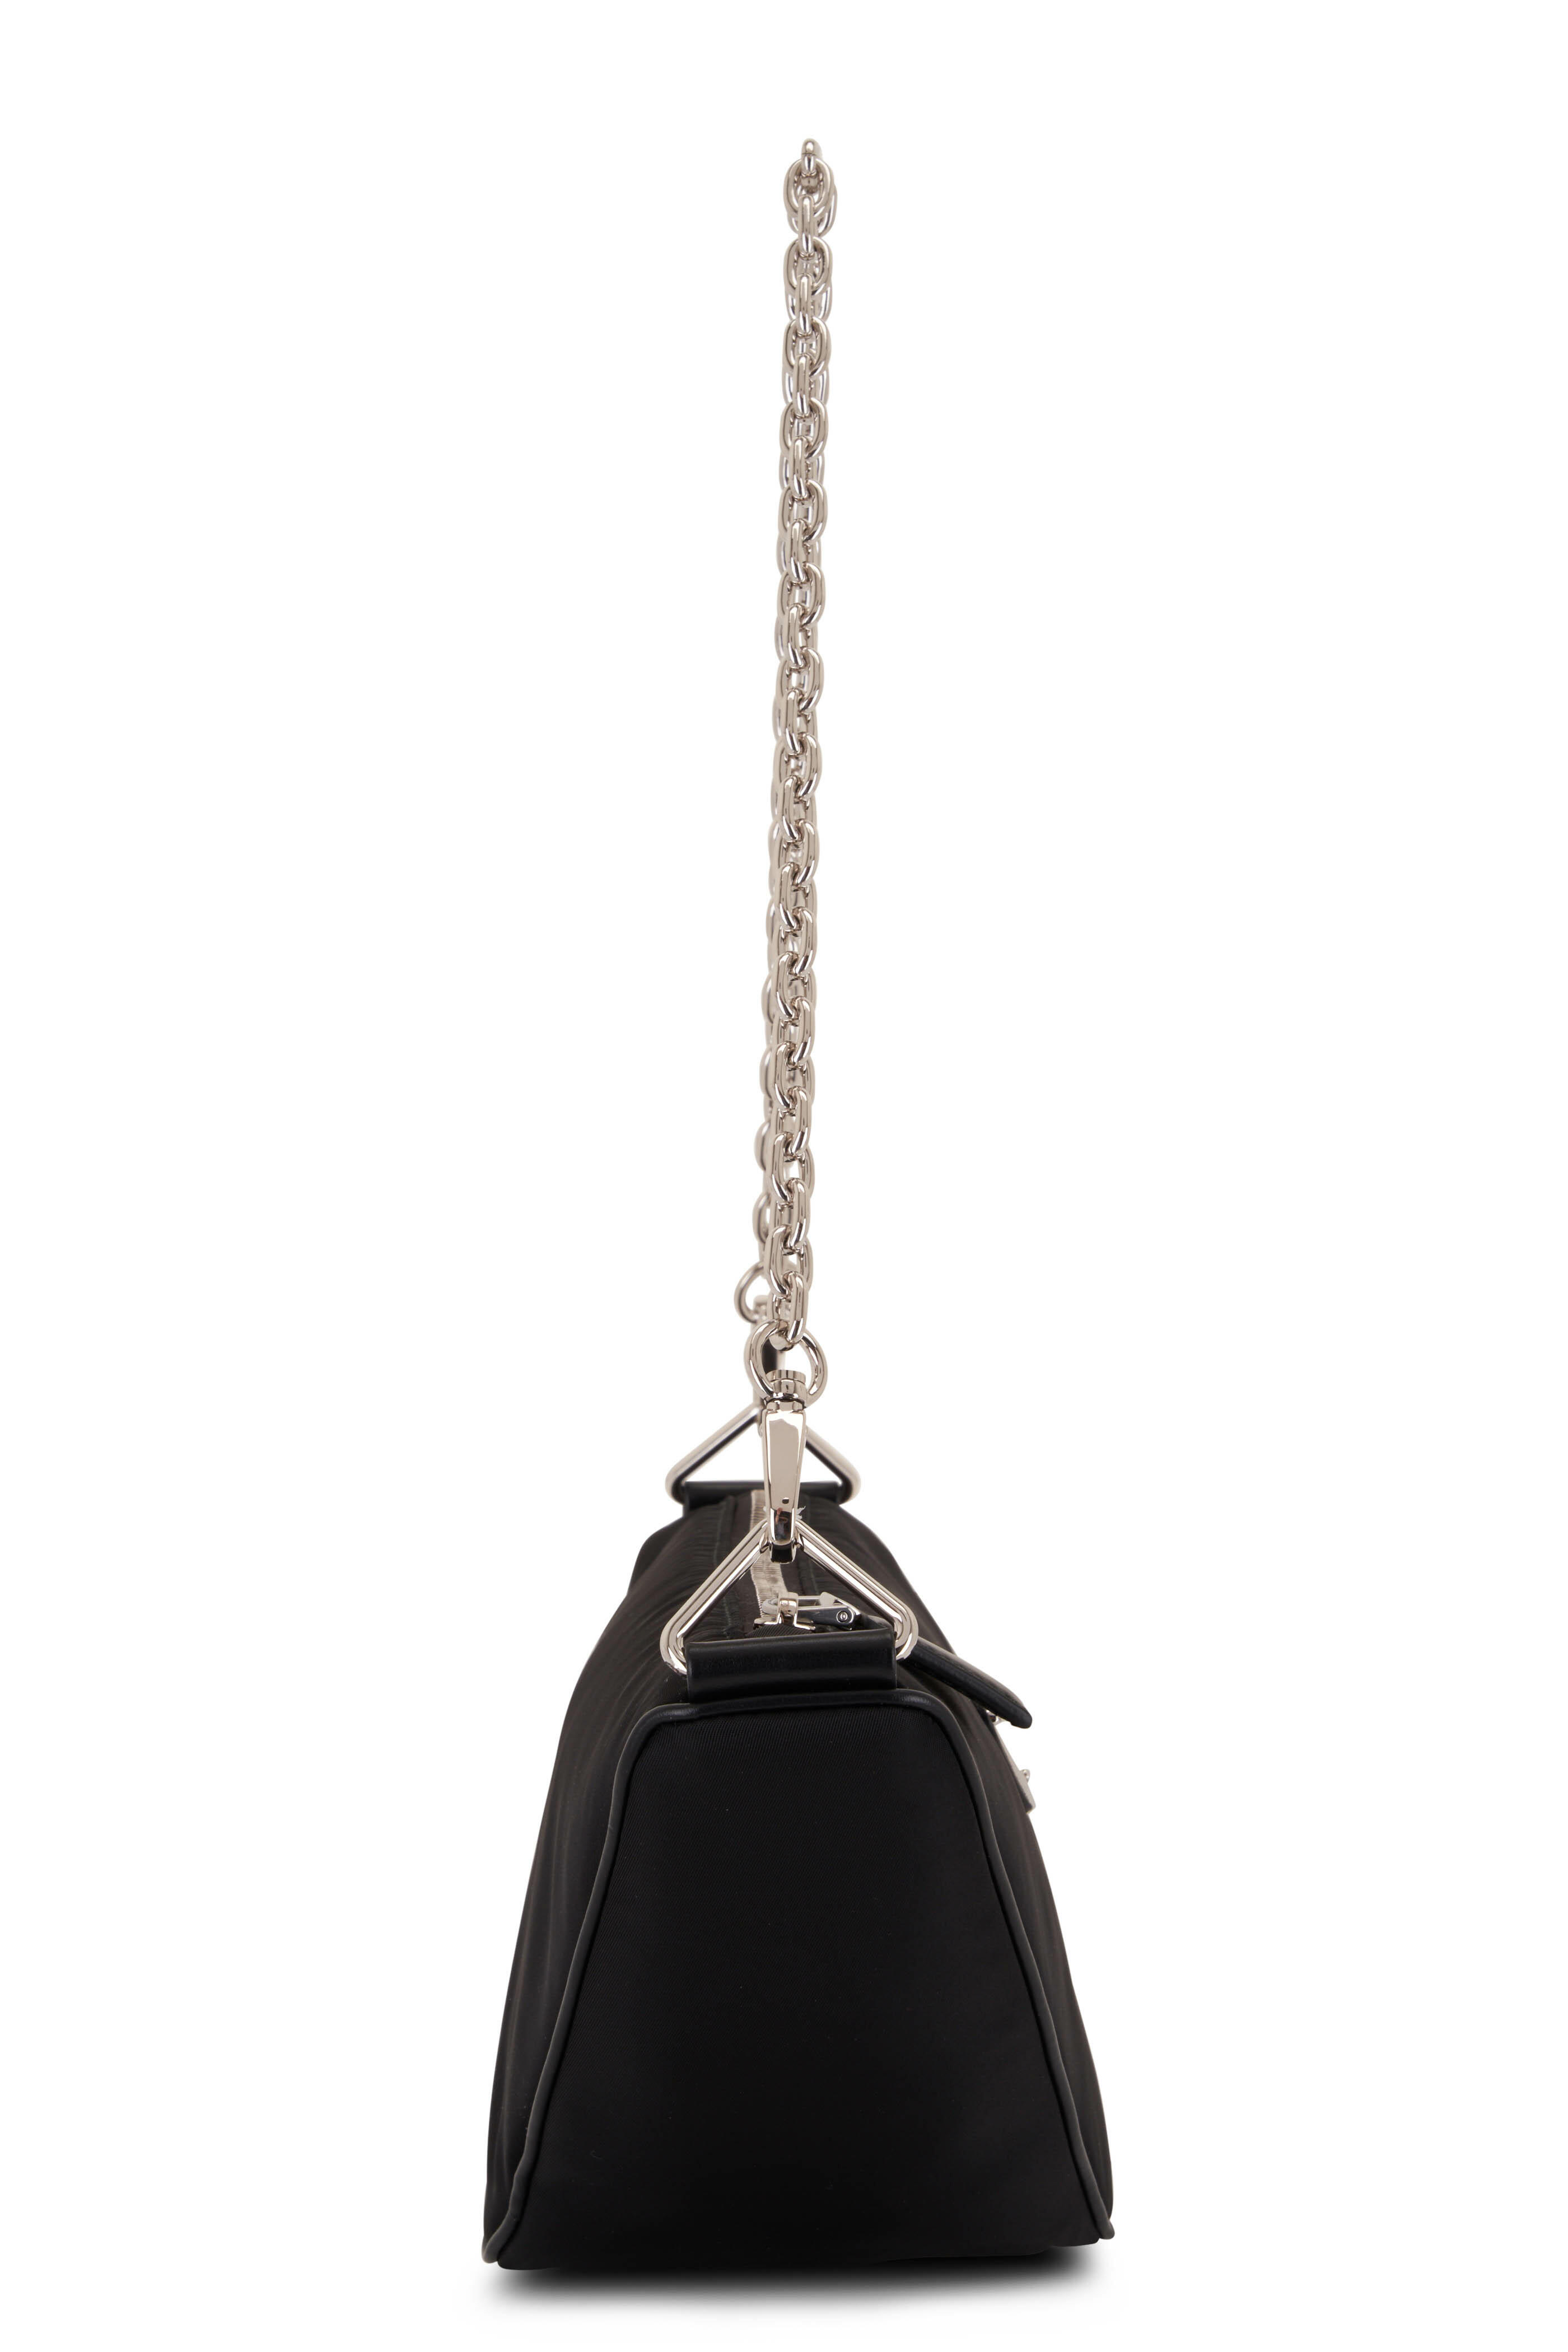 PRADA: nylon handbag with triangular logo - Black  Prada shoulder bag  1NI545 067 online at